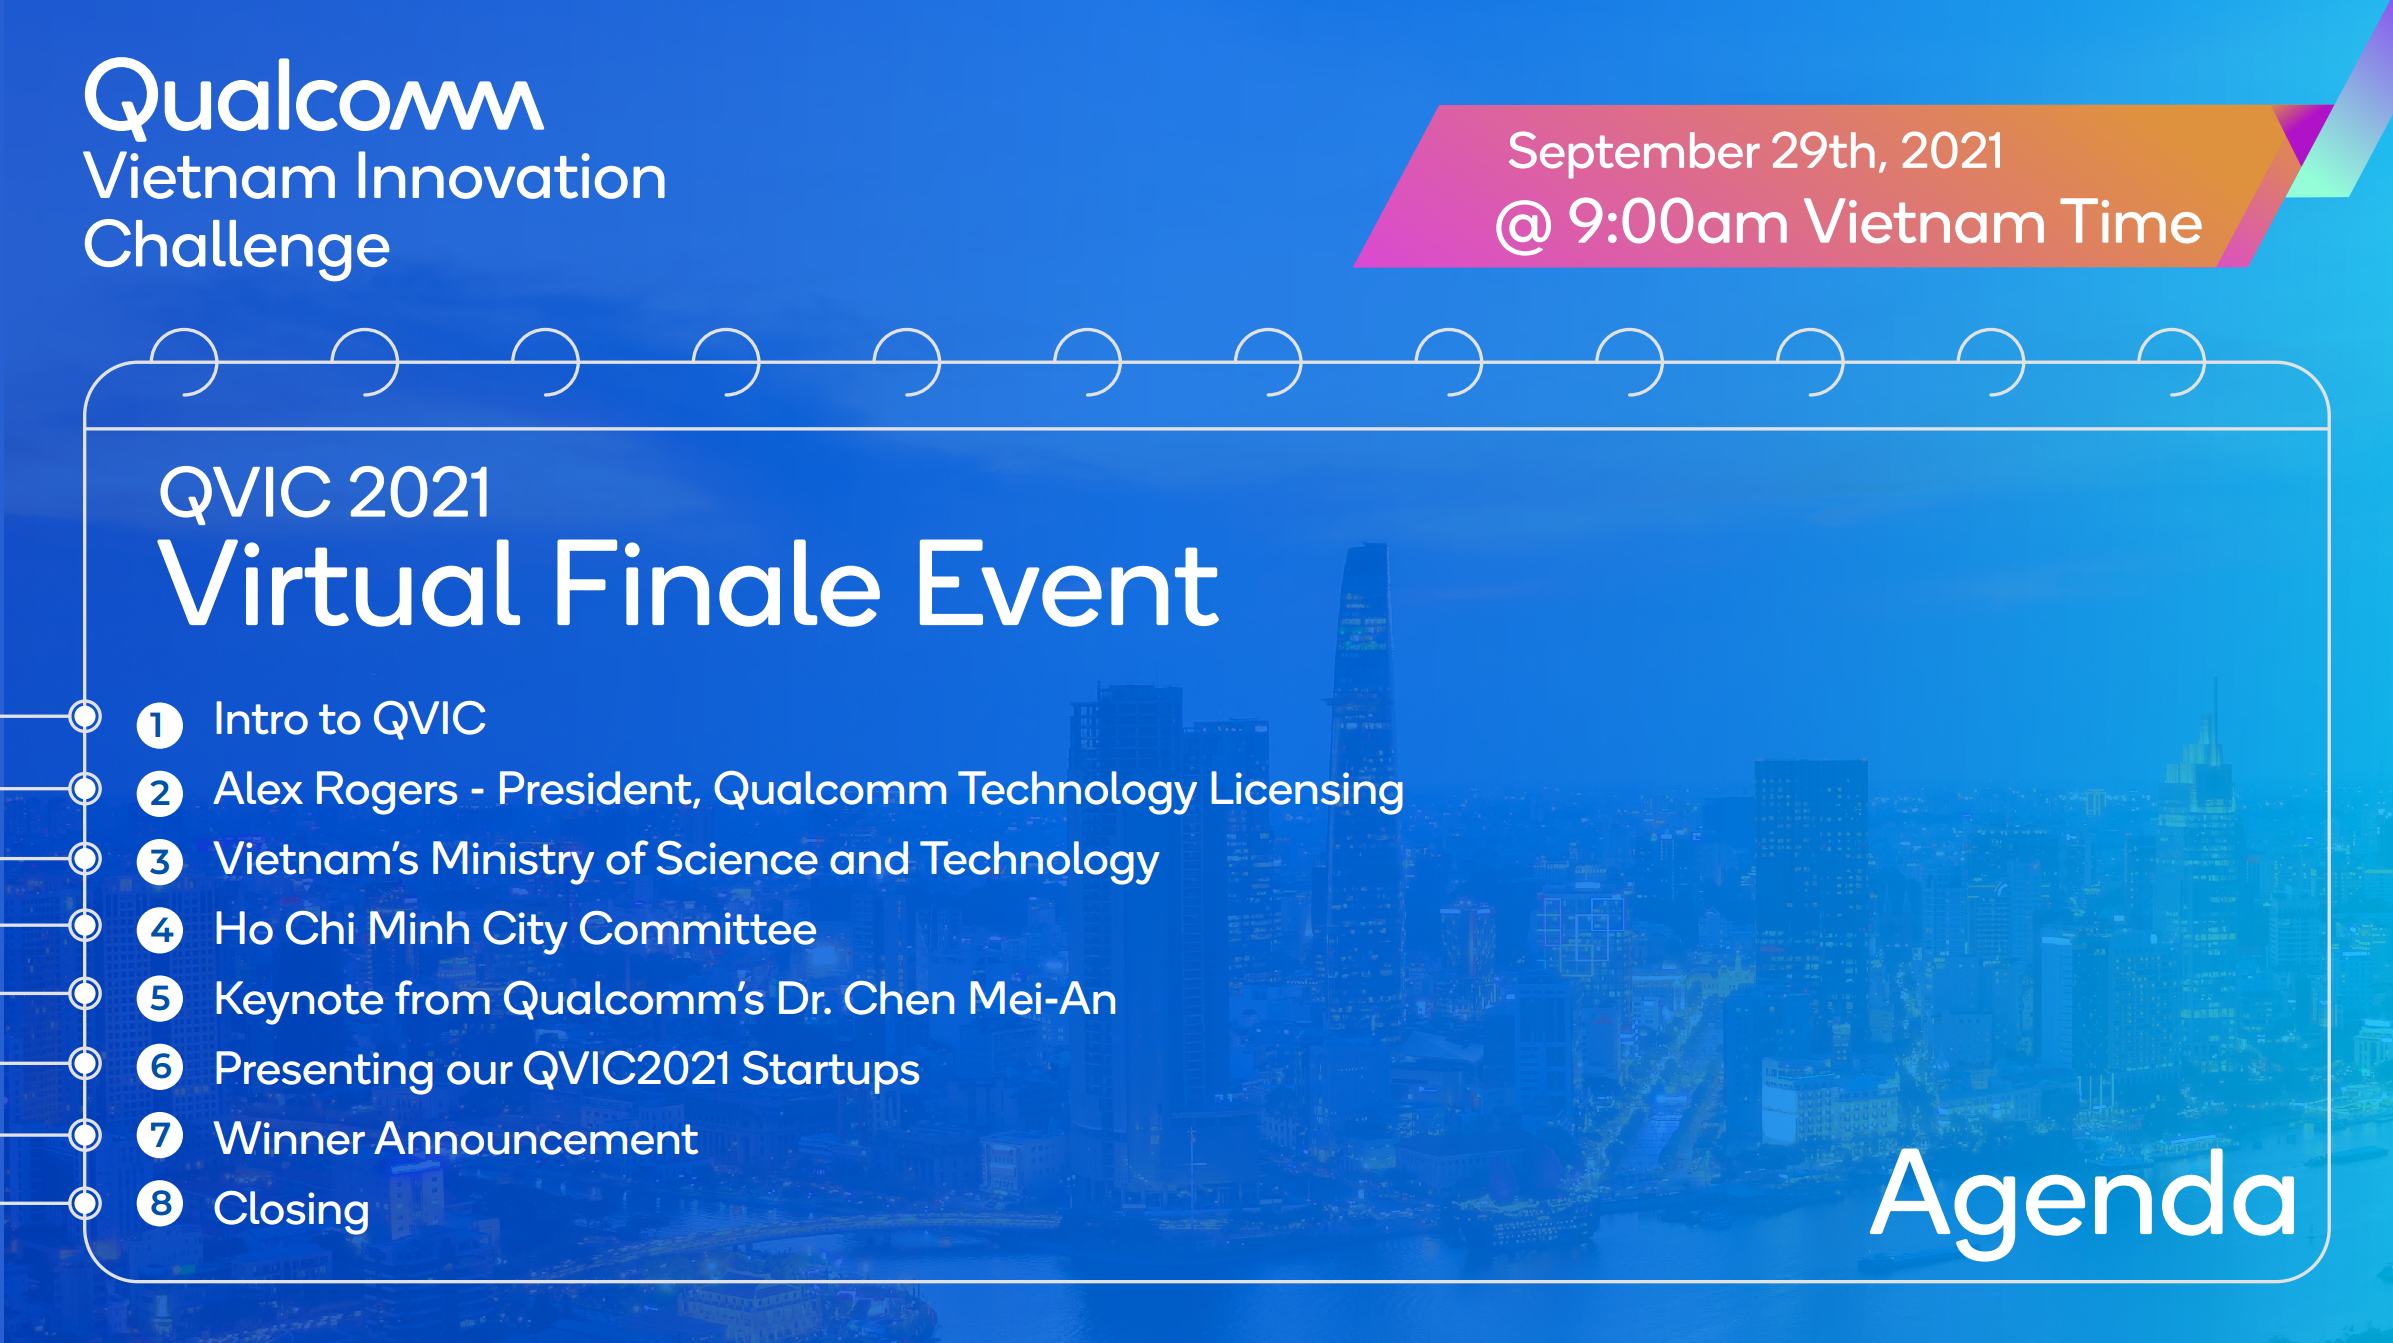 Qualcomm Vietnam Innovation Challenge 2021 - Virtual Finale Event